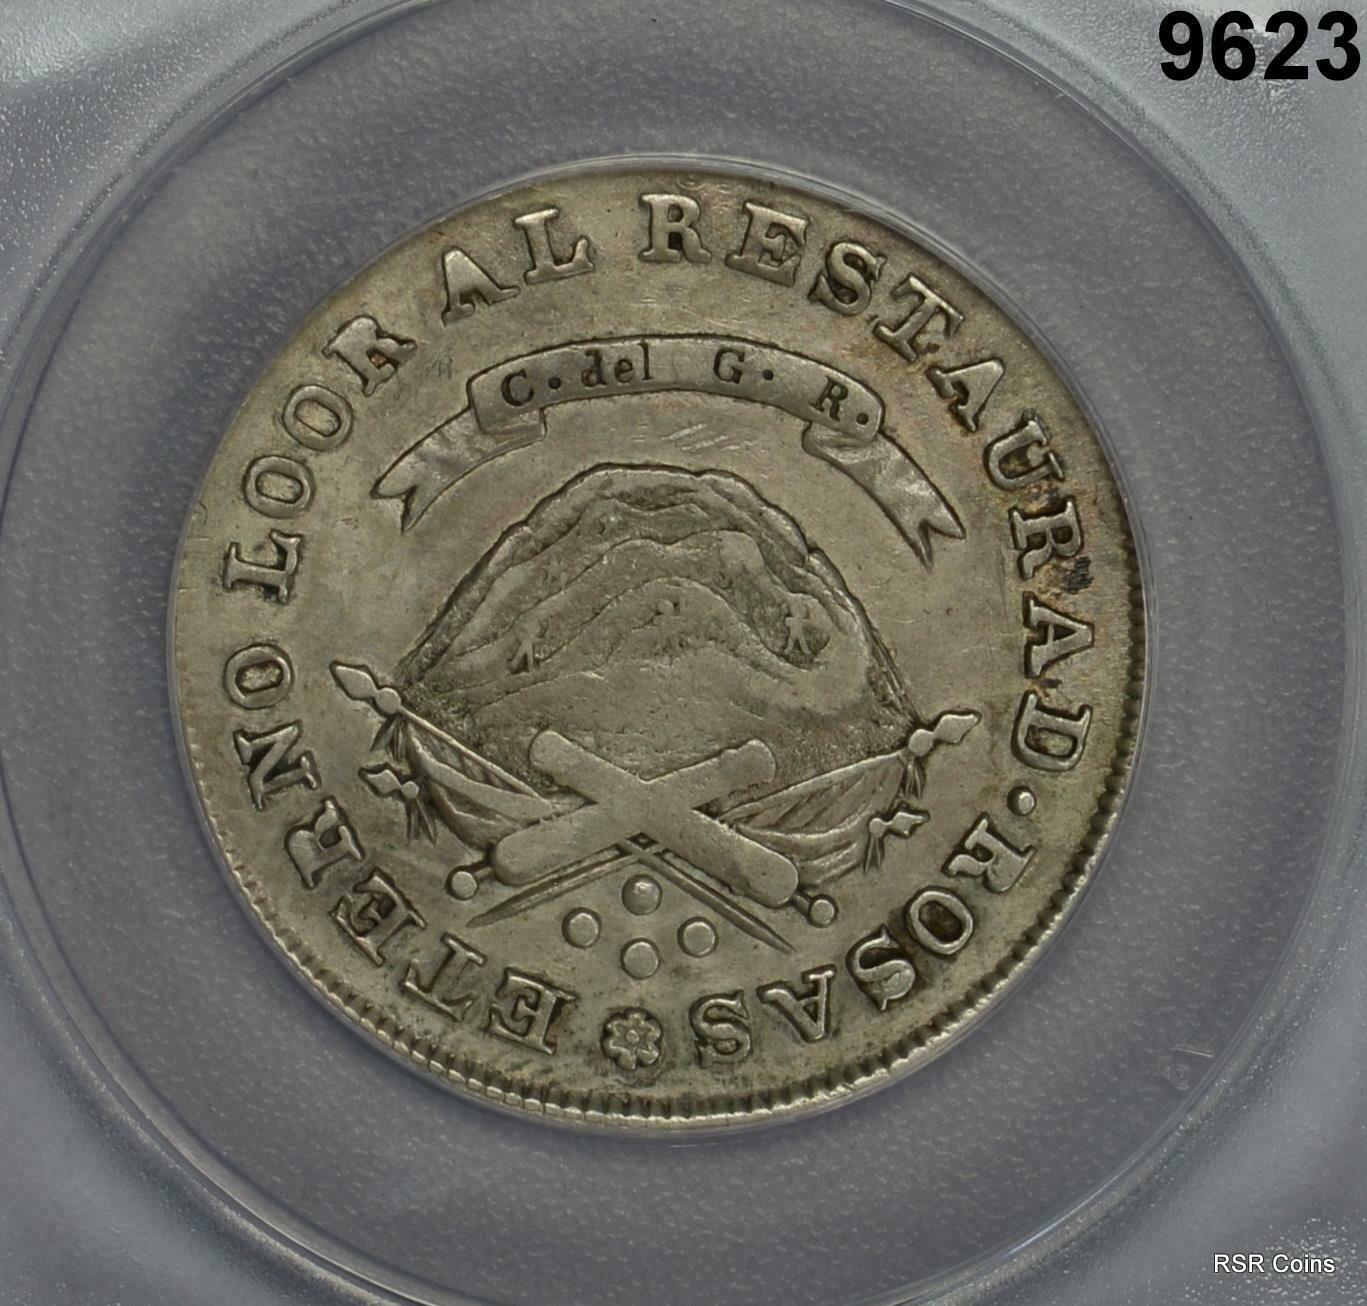 1850-RB ARGENTINA LA RIOJA 4 REALES ANACS CERTIFIED VF20 ORIGINAL!! #9623